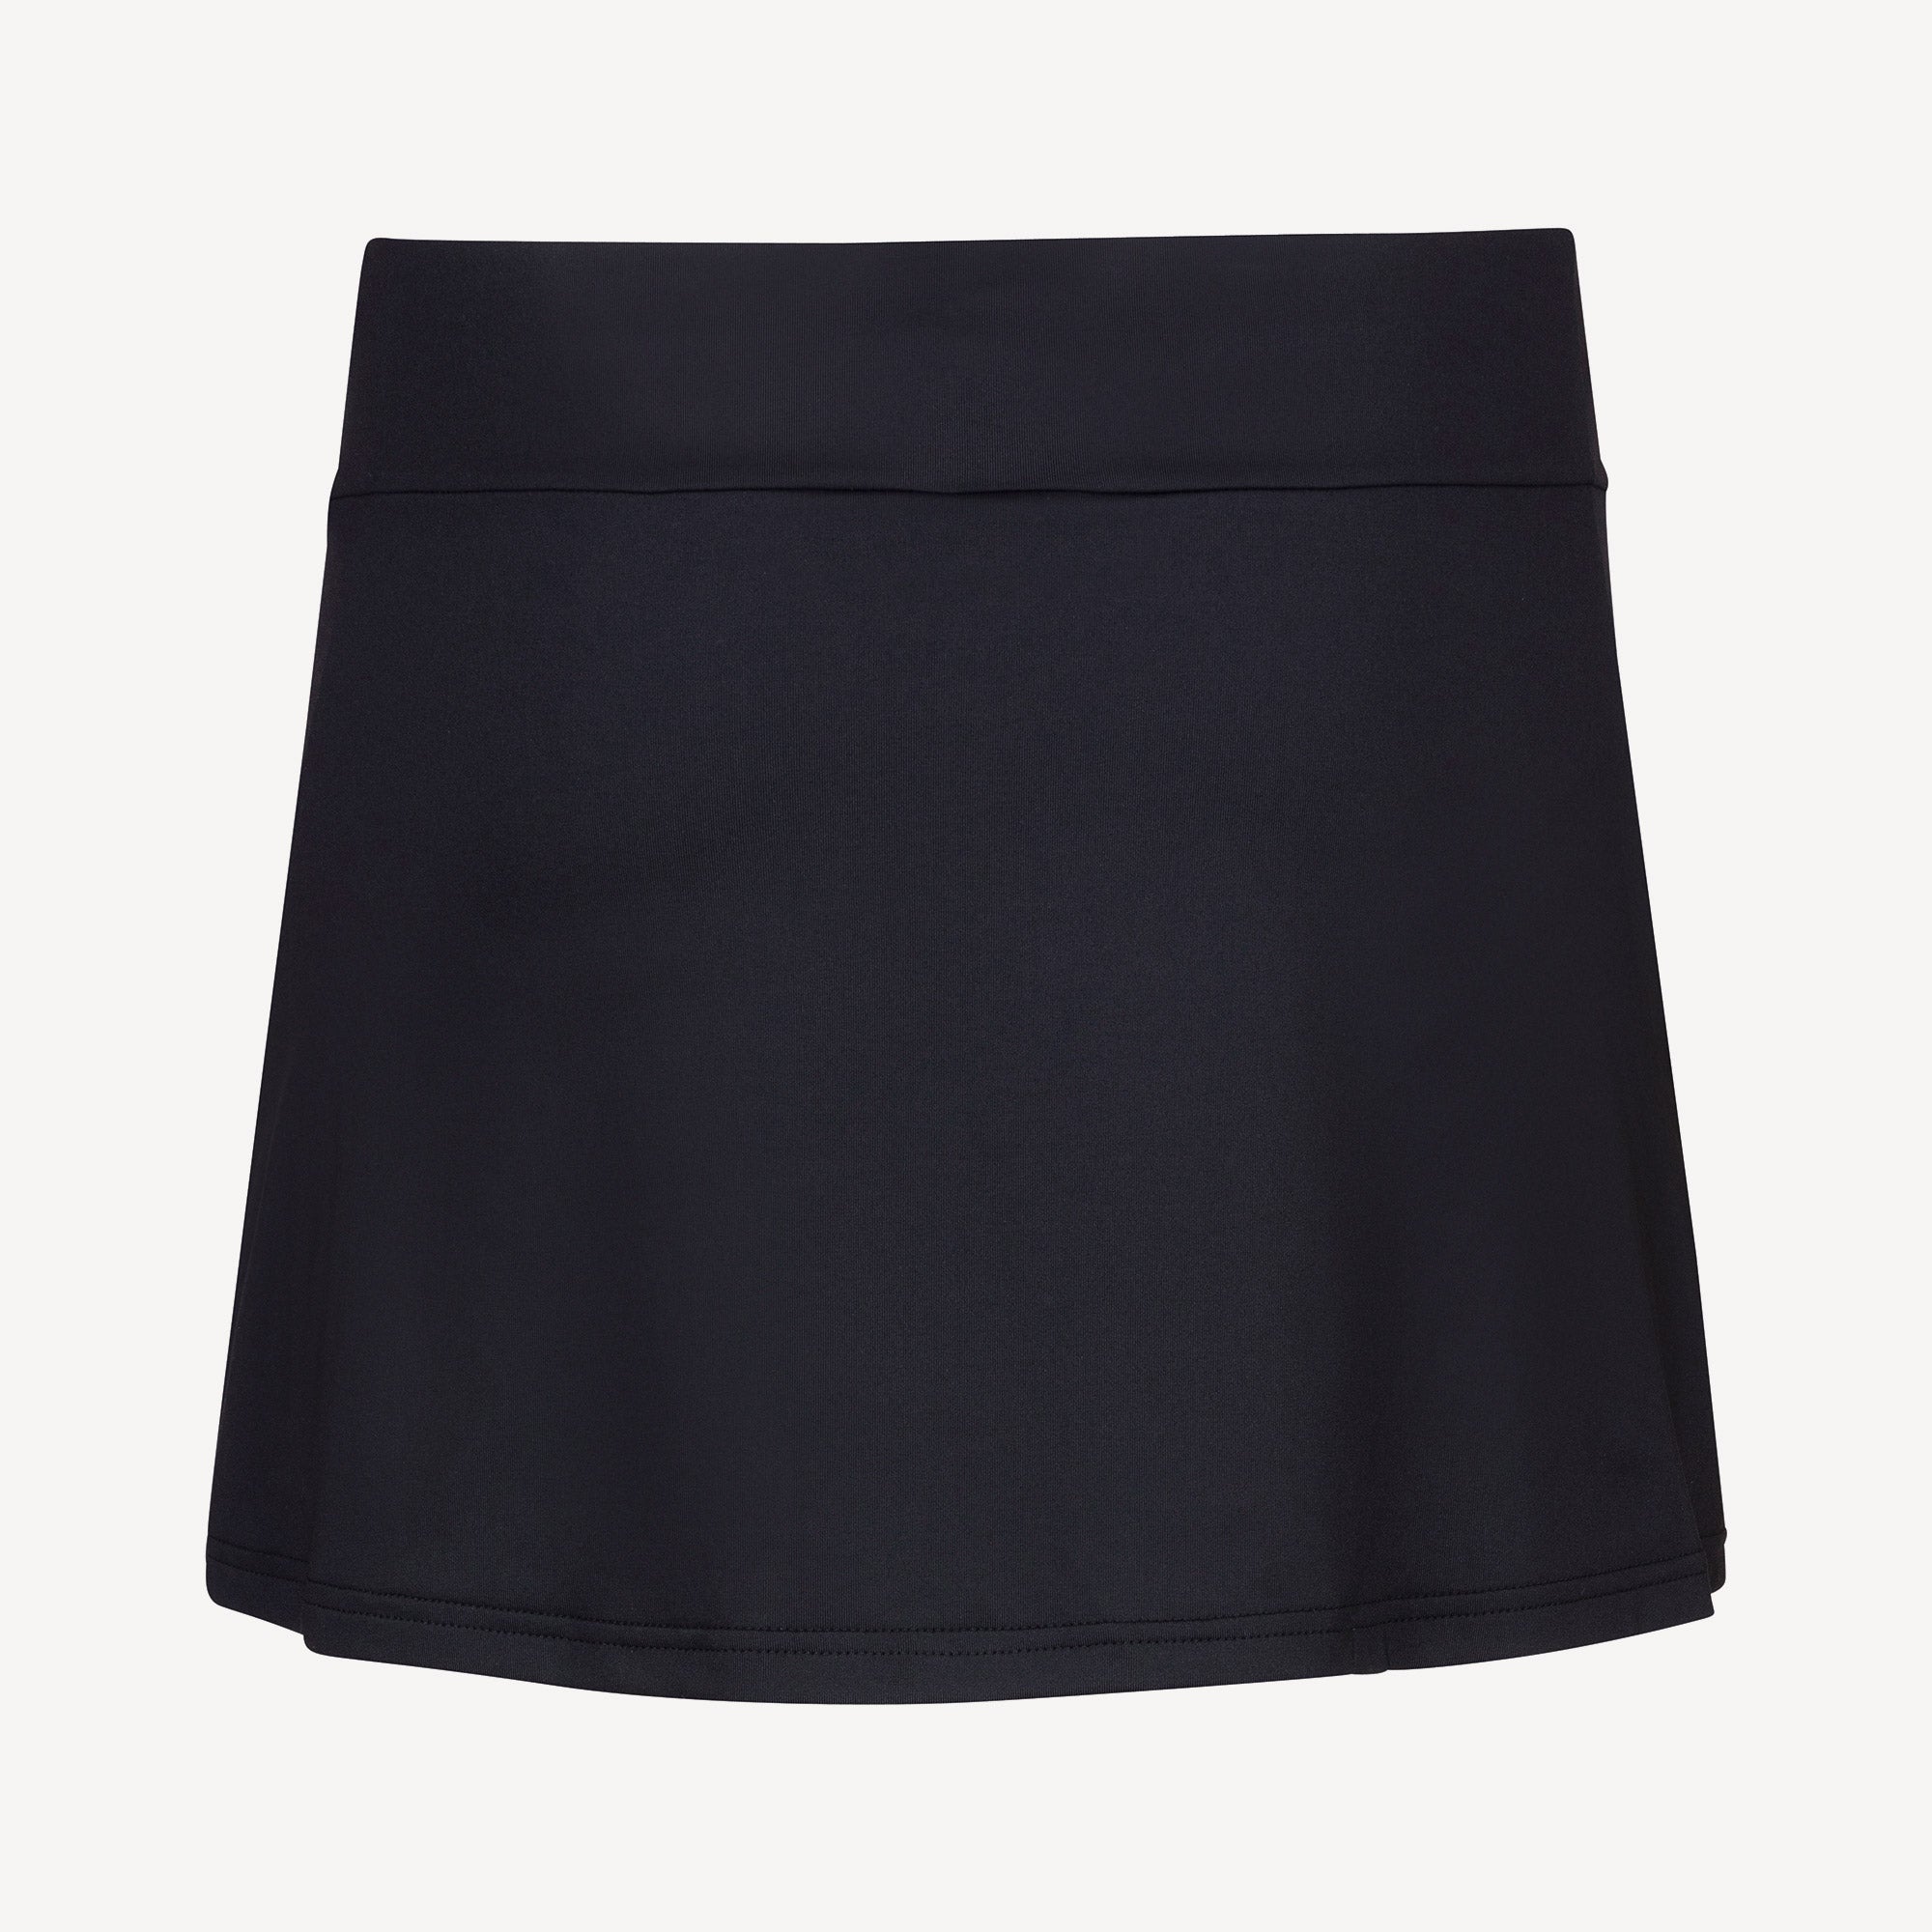 Babolat Play Club Women's Tennis Skirt Black (2)